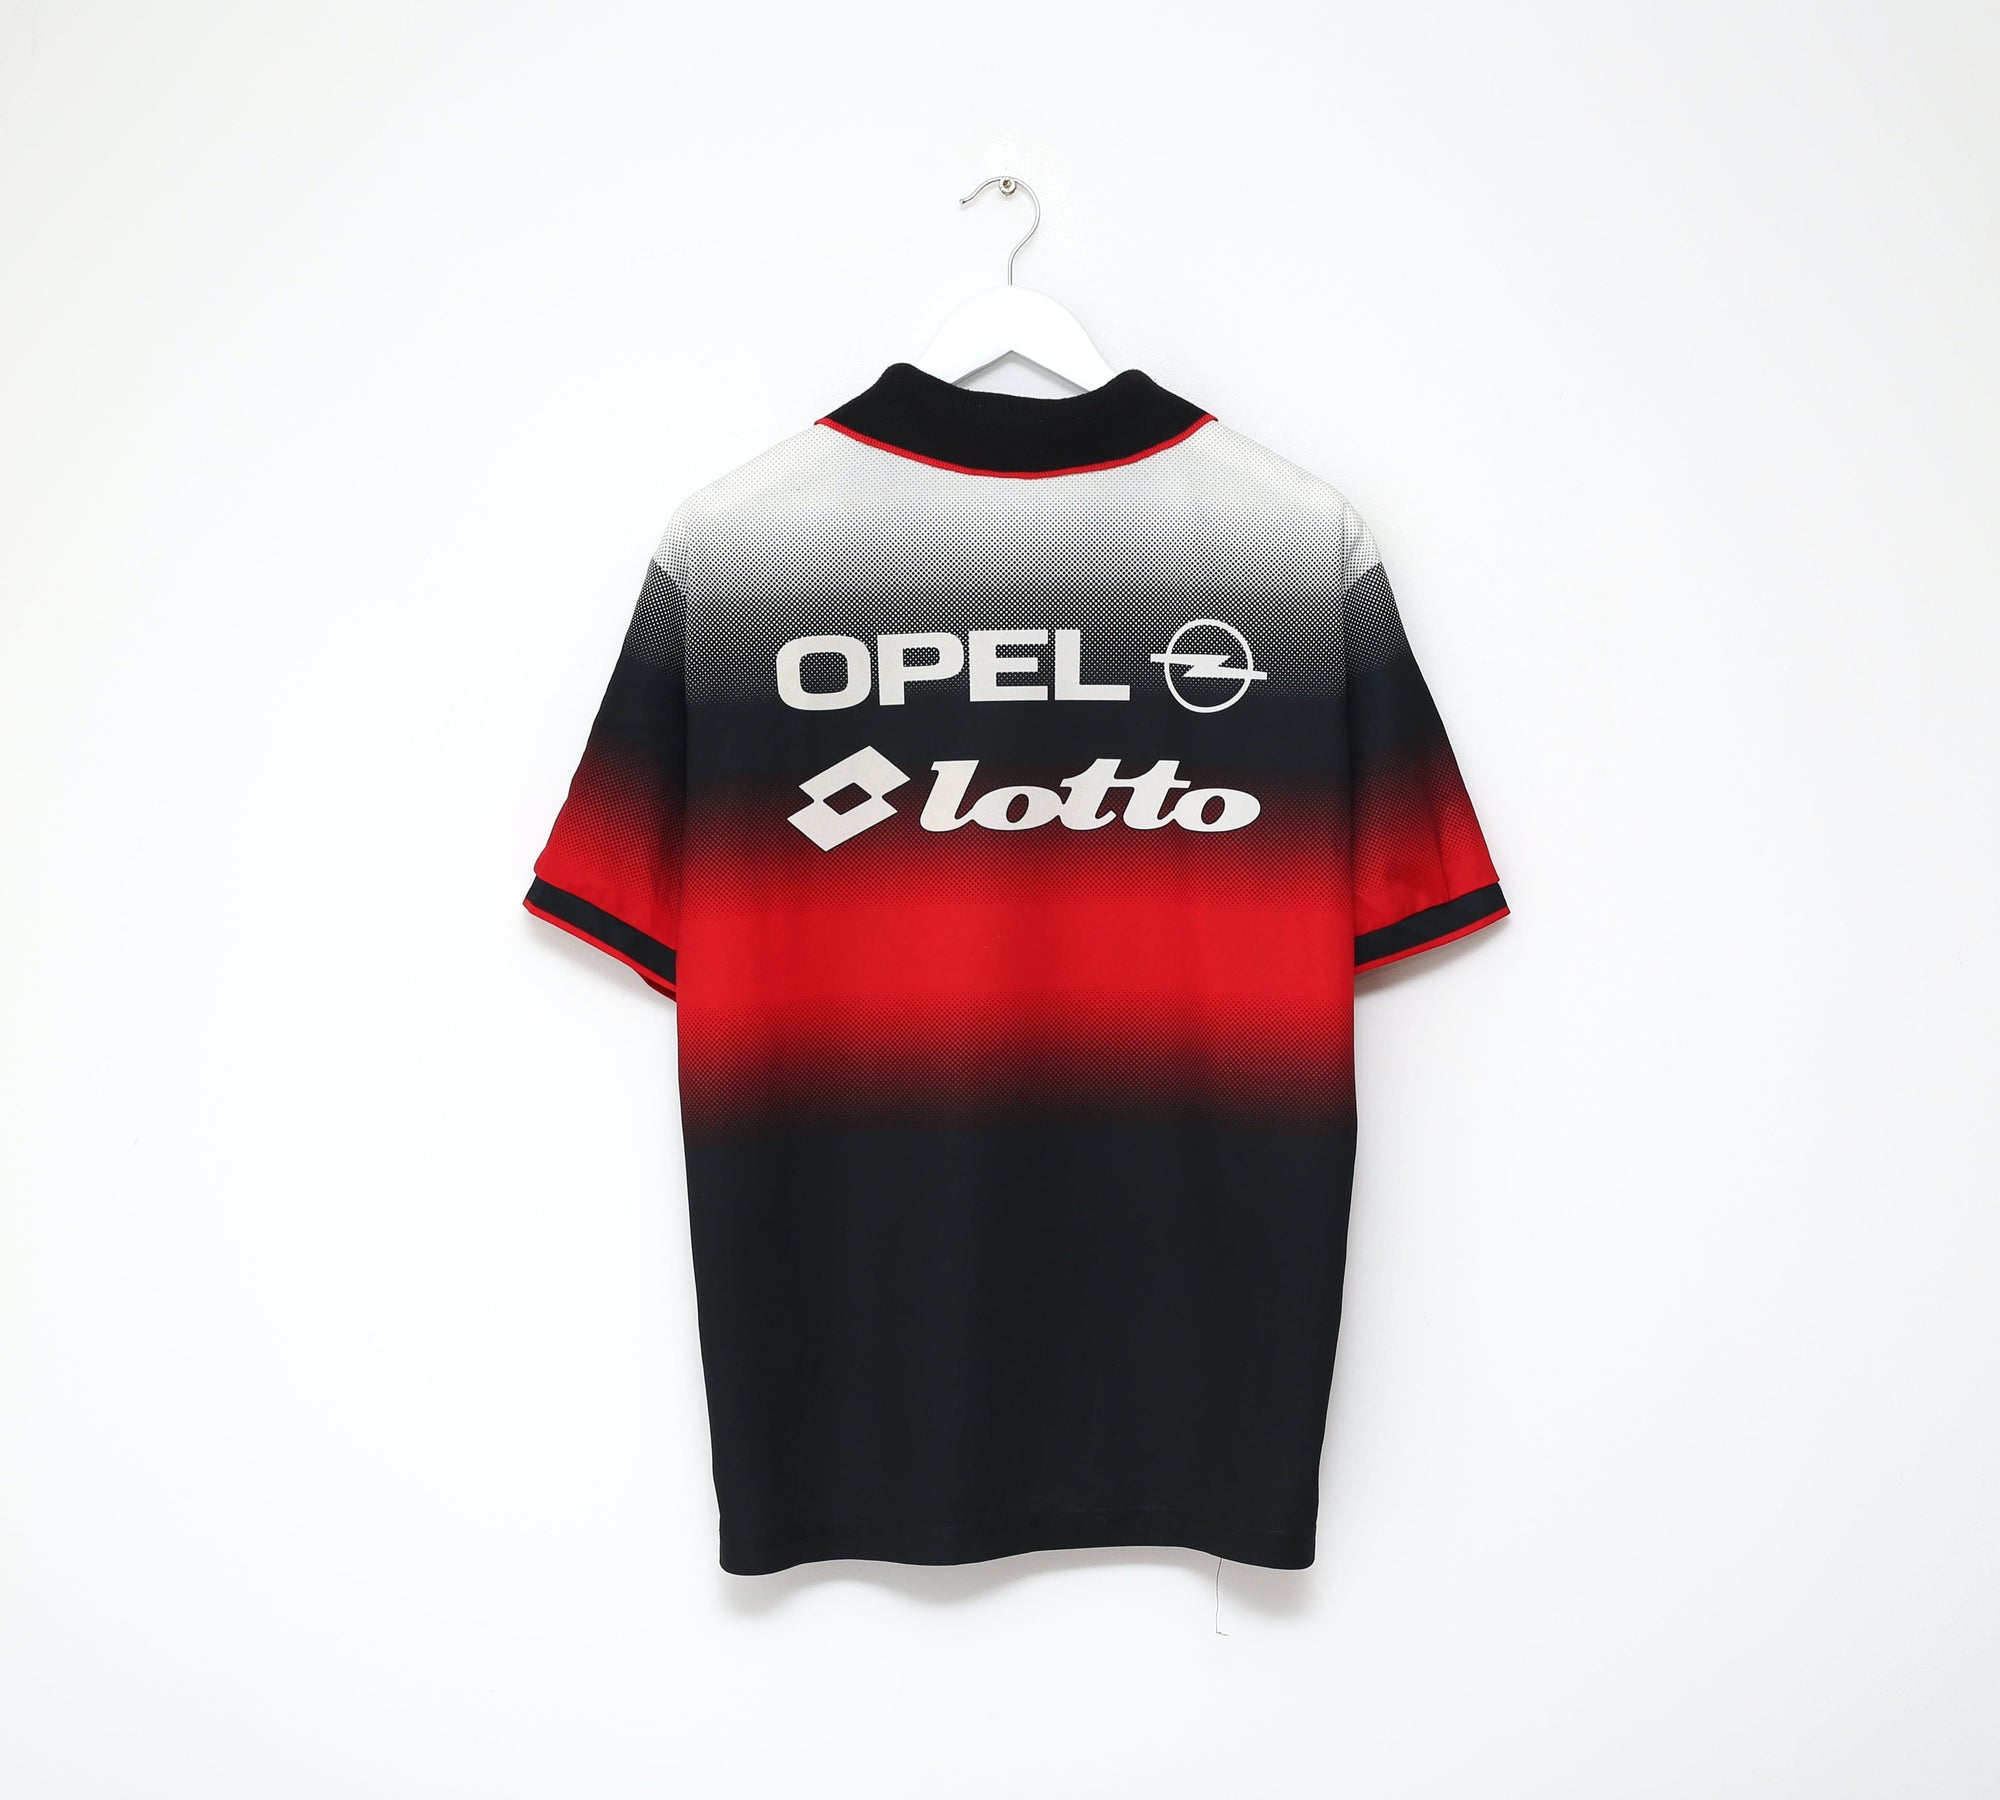 1996/97 AC MILAN Vintage Lotto Football Training Shirt (L)